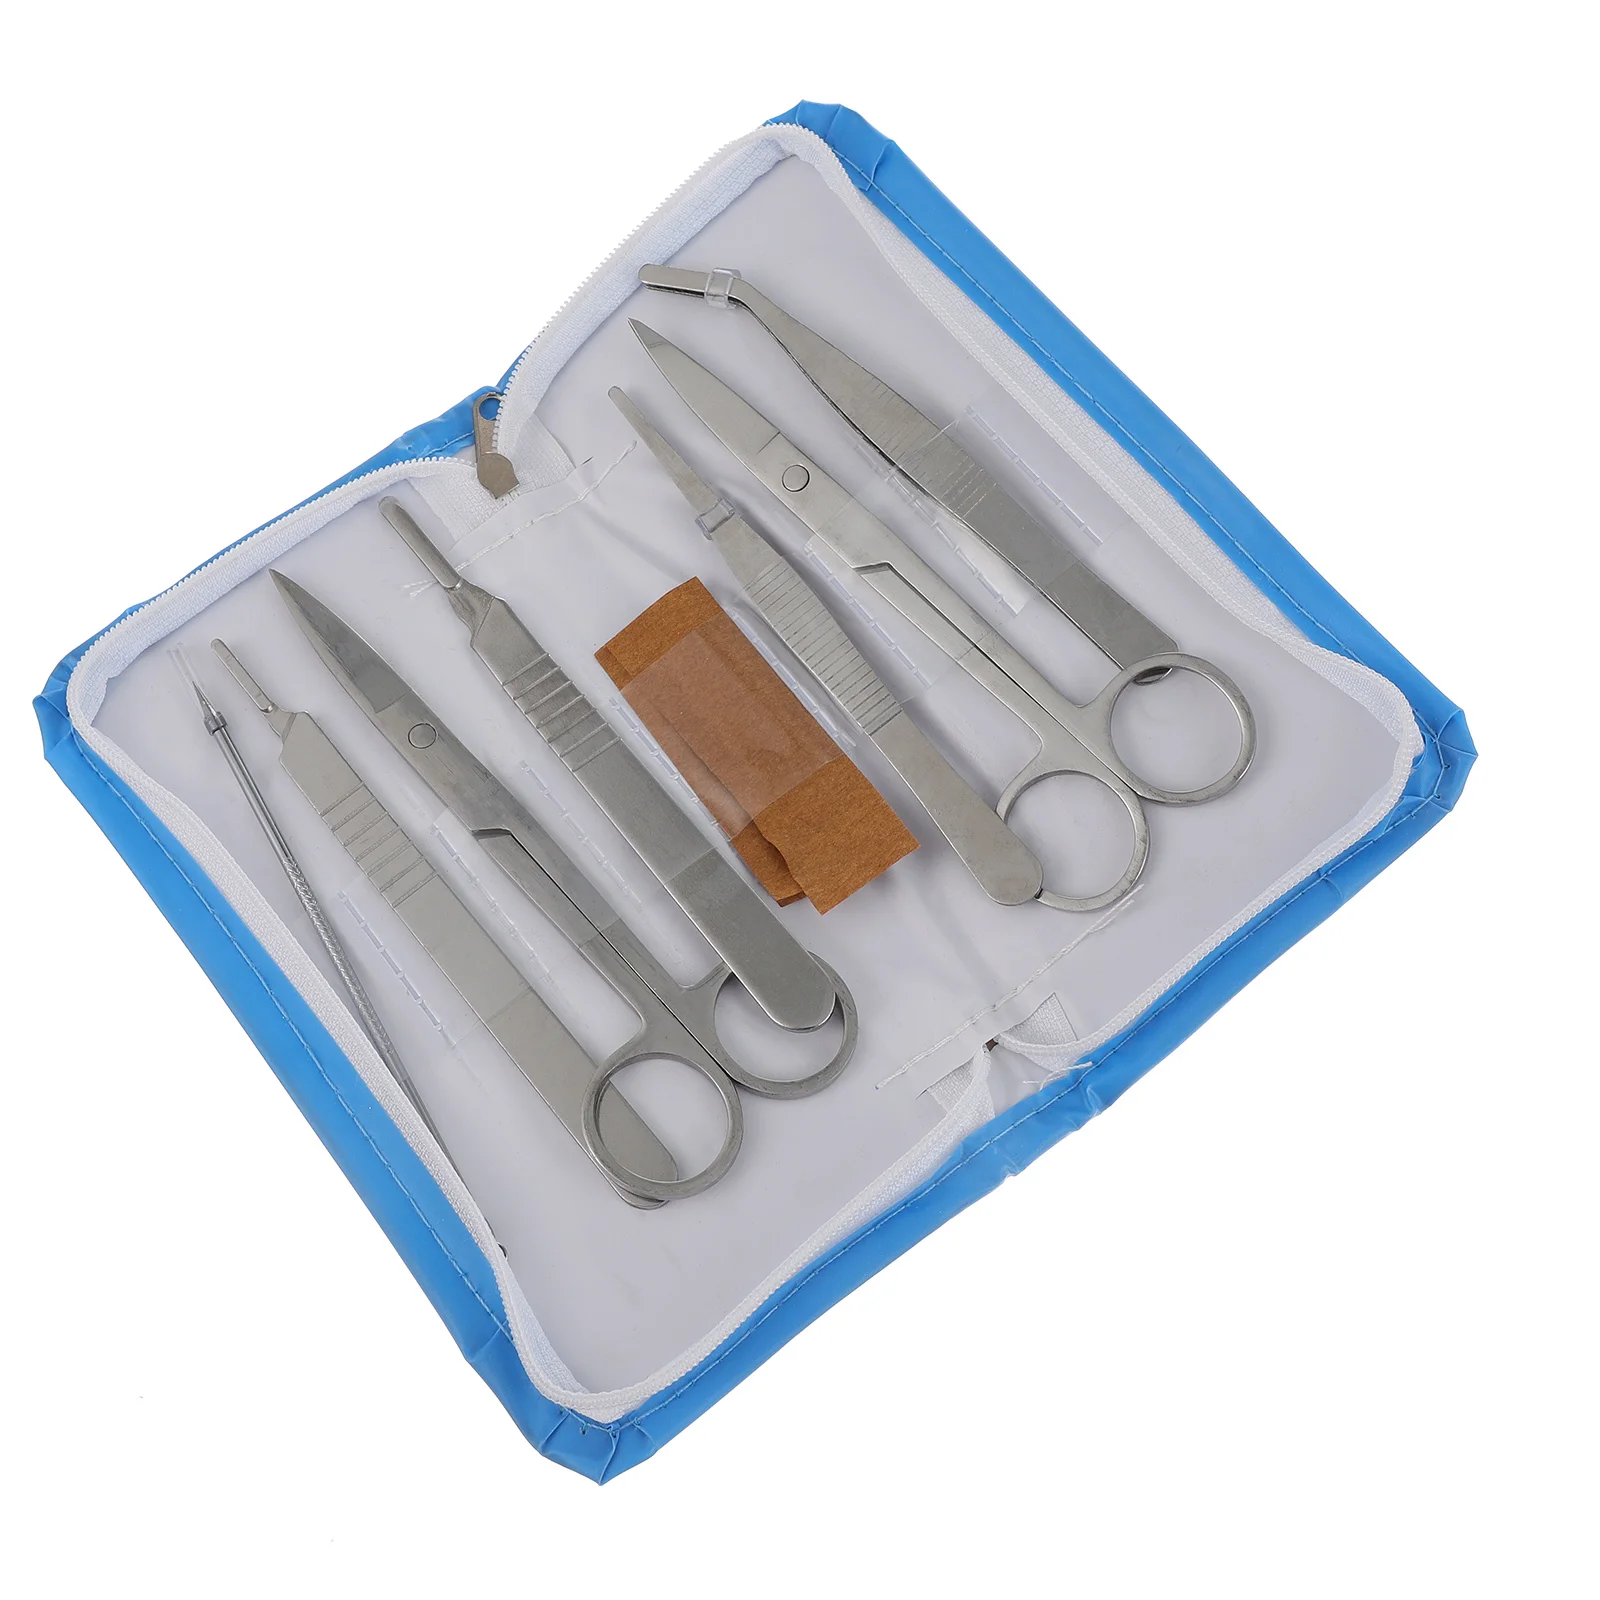 Precision cutter - Bricolabo - Dissection - Sampling 